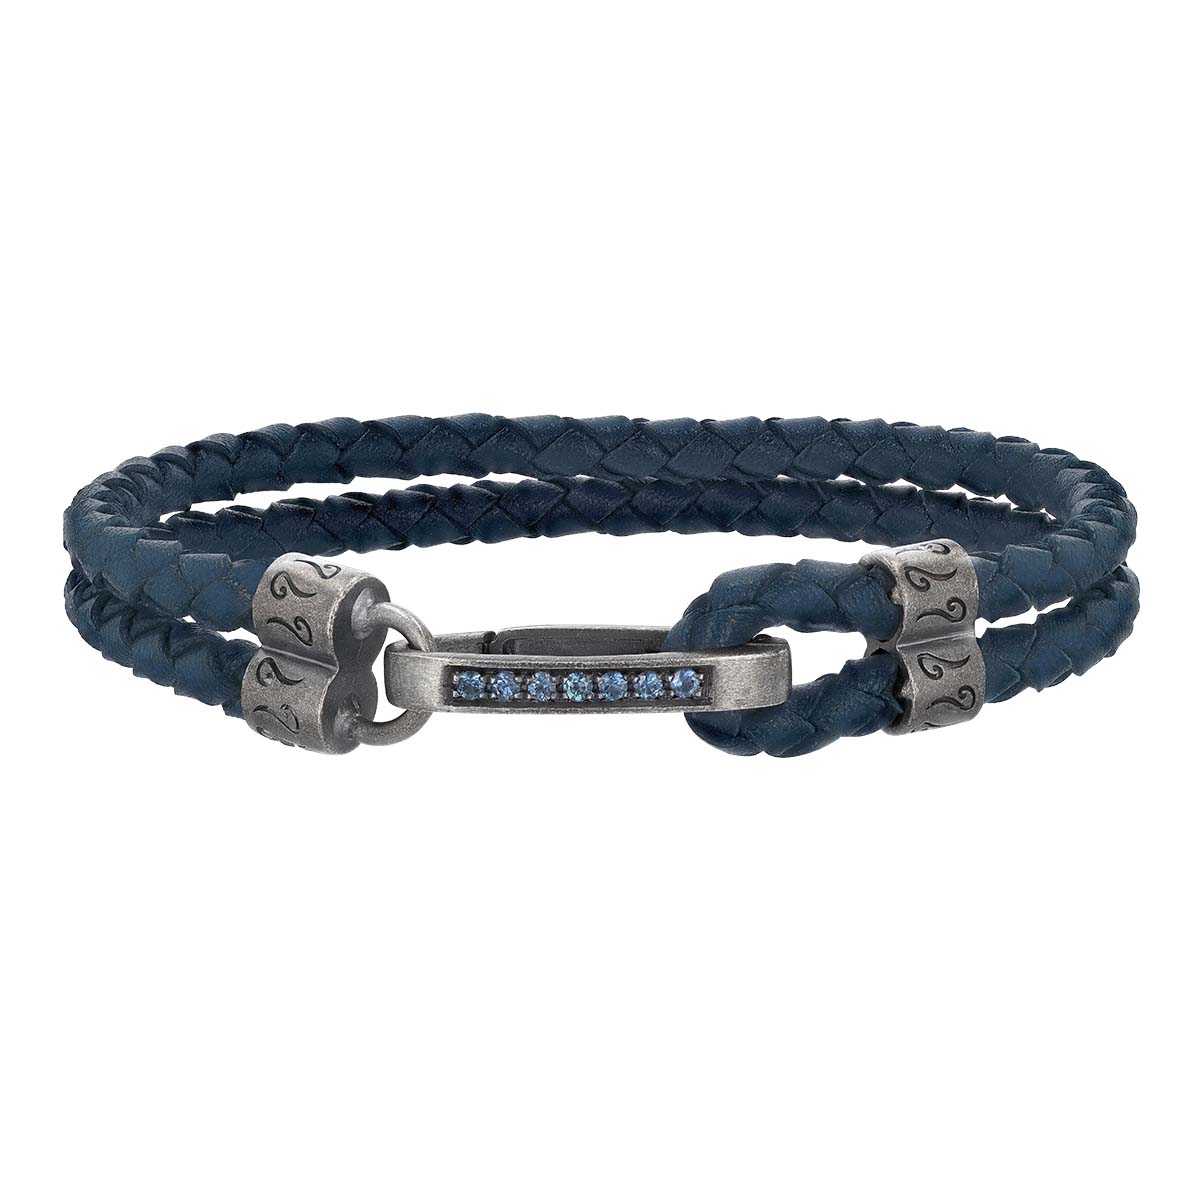 Marco Dal Maso Lash Sapphire & Blue Leather Bracelet in Sterling Silver ...